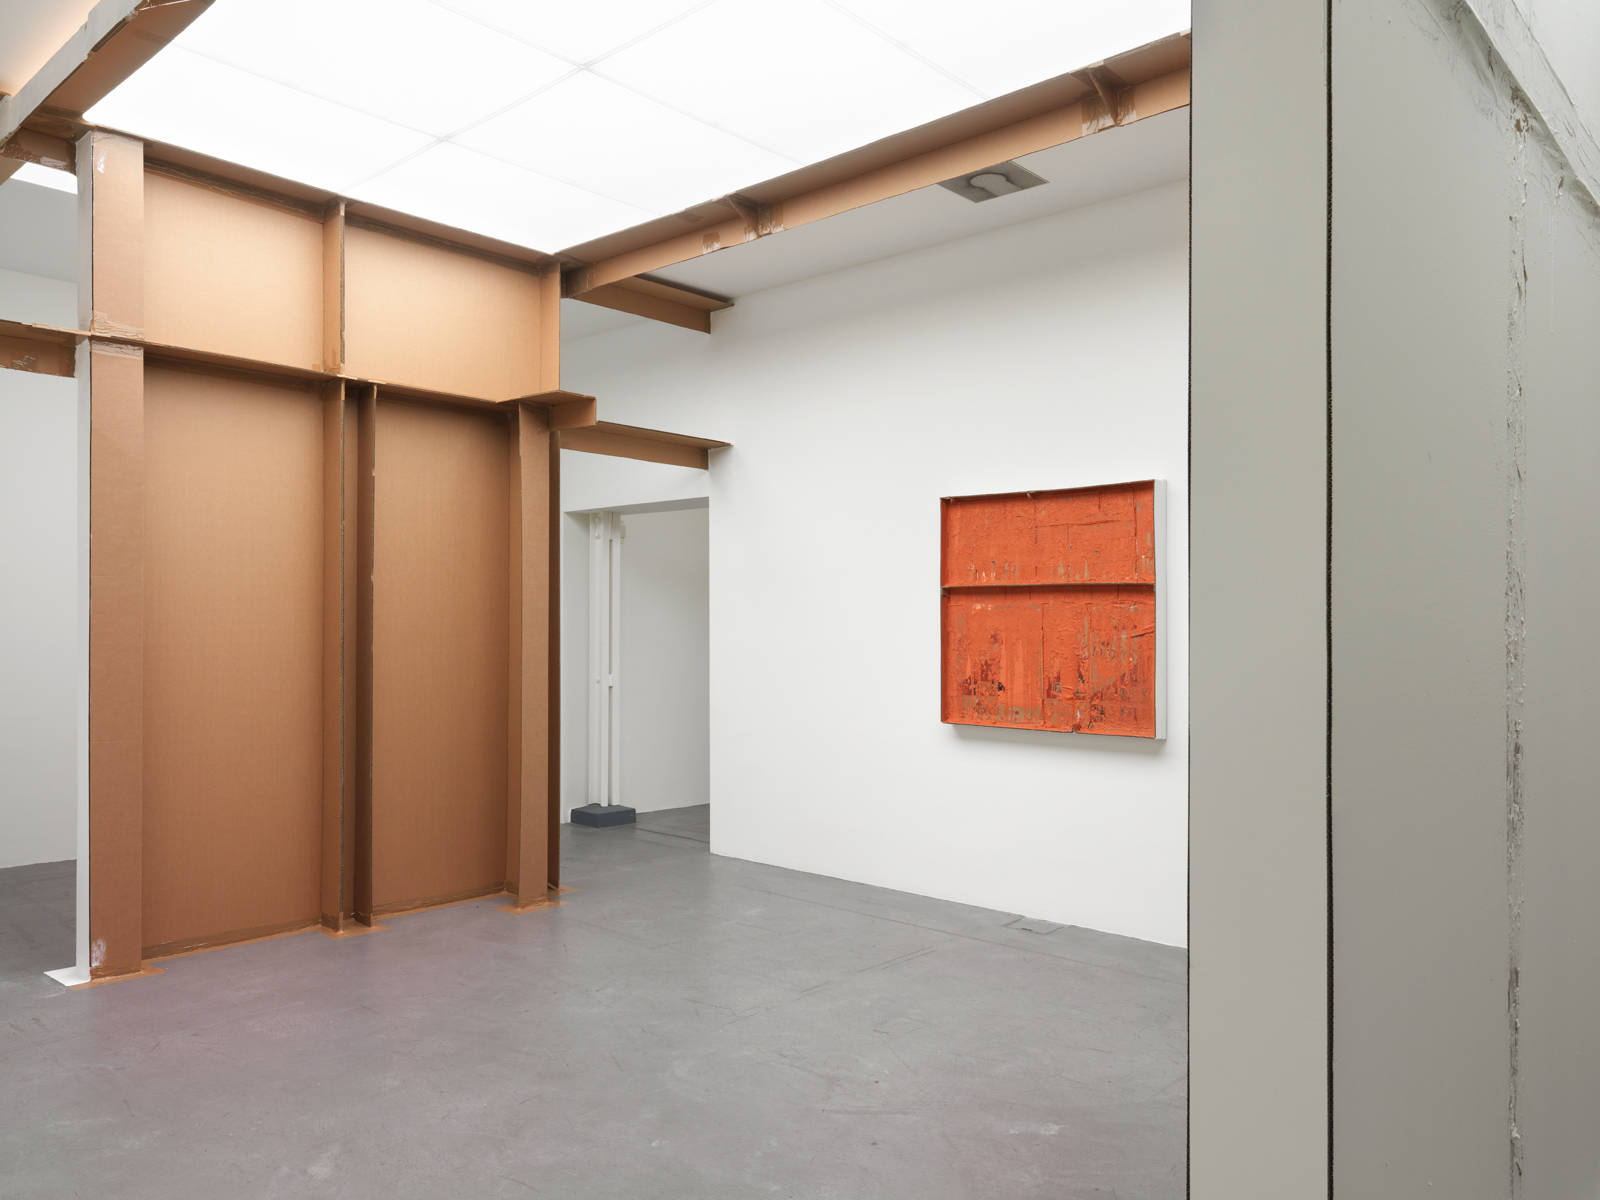 Carlos Bunga / "I am a Nomad", exhibition view, Haus Konstruktiv, Zürich / 2015